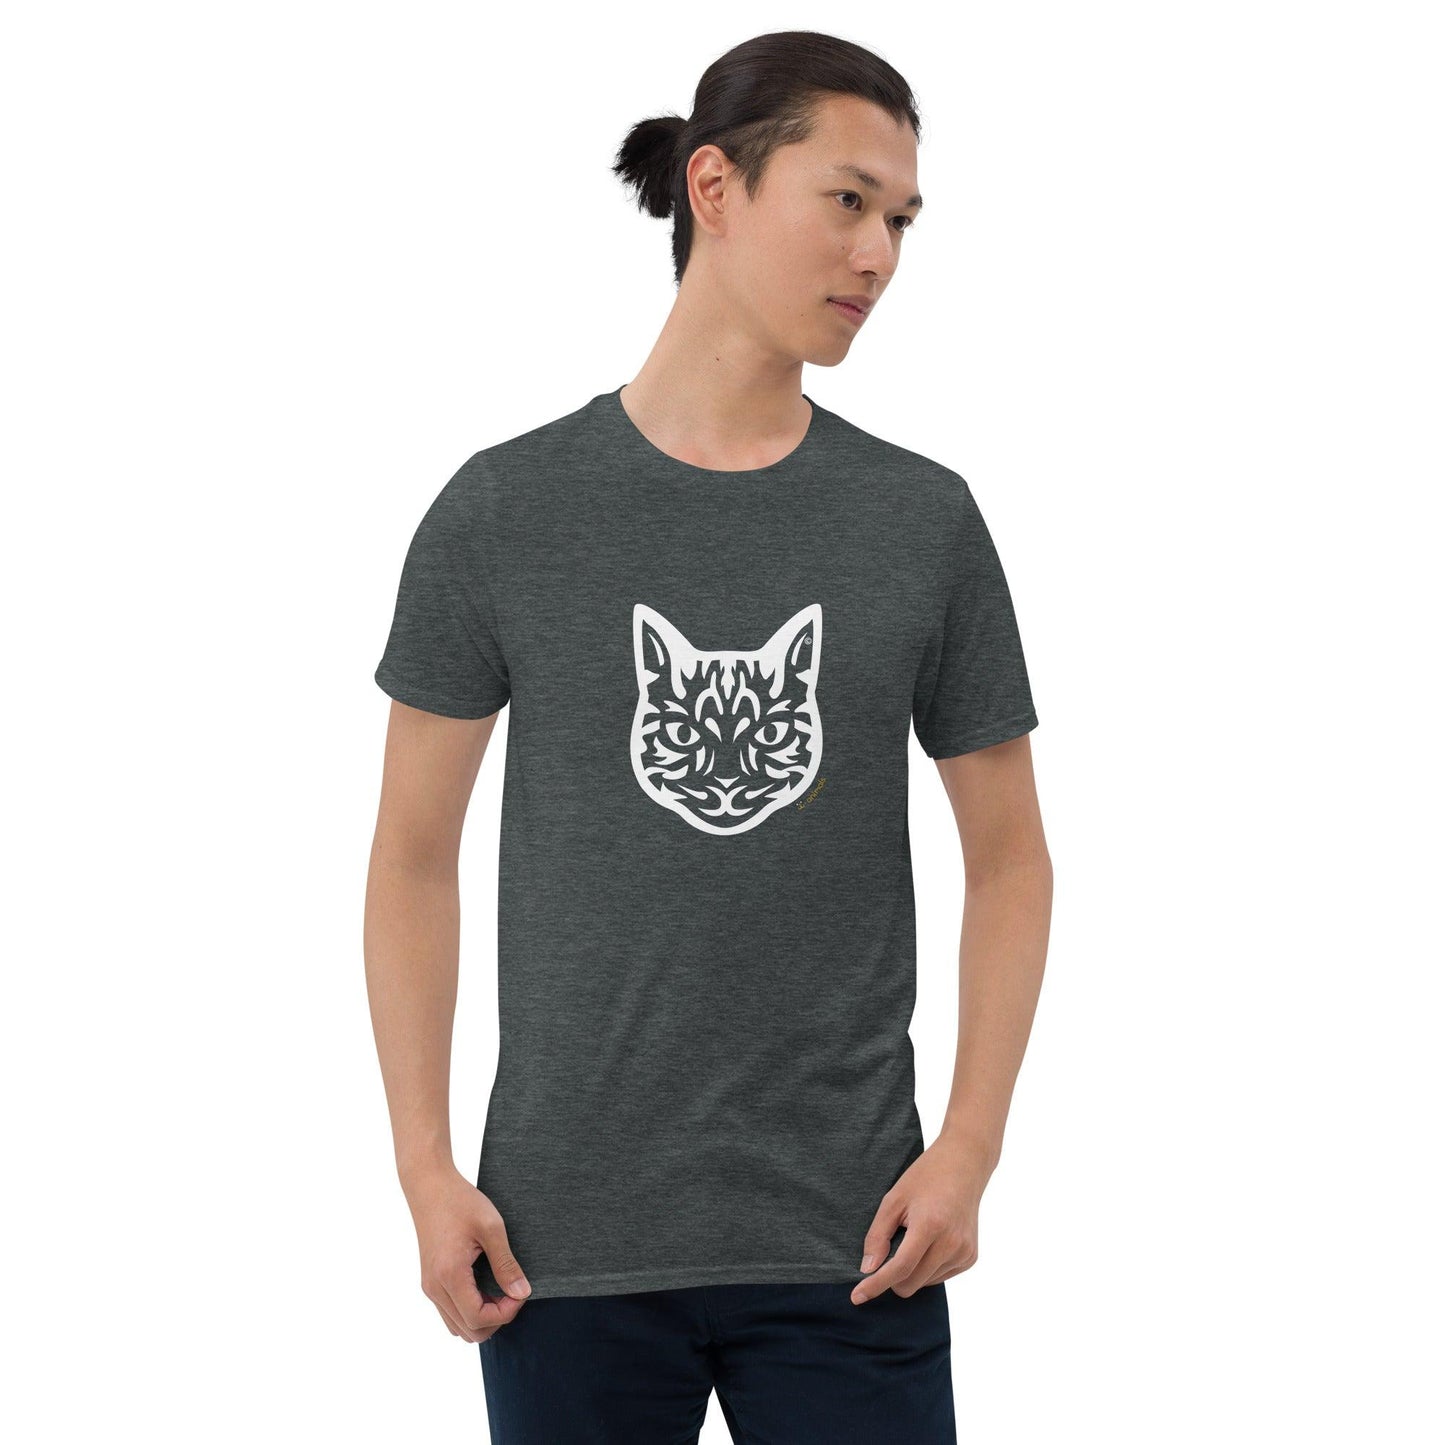 Camiseta unissex de manga curta - Gato Tigrado - Tribal i-animals